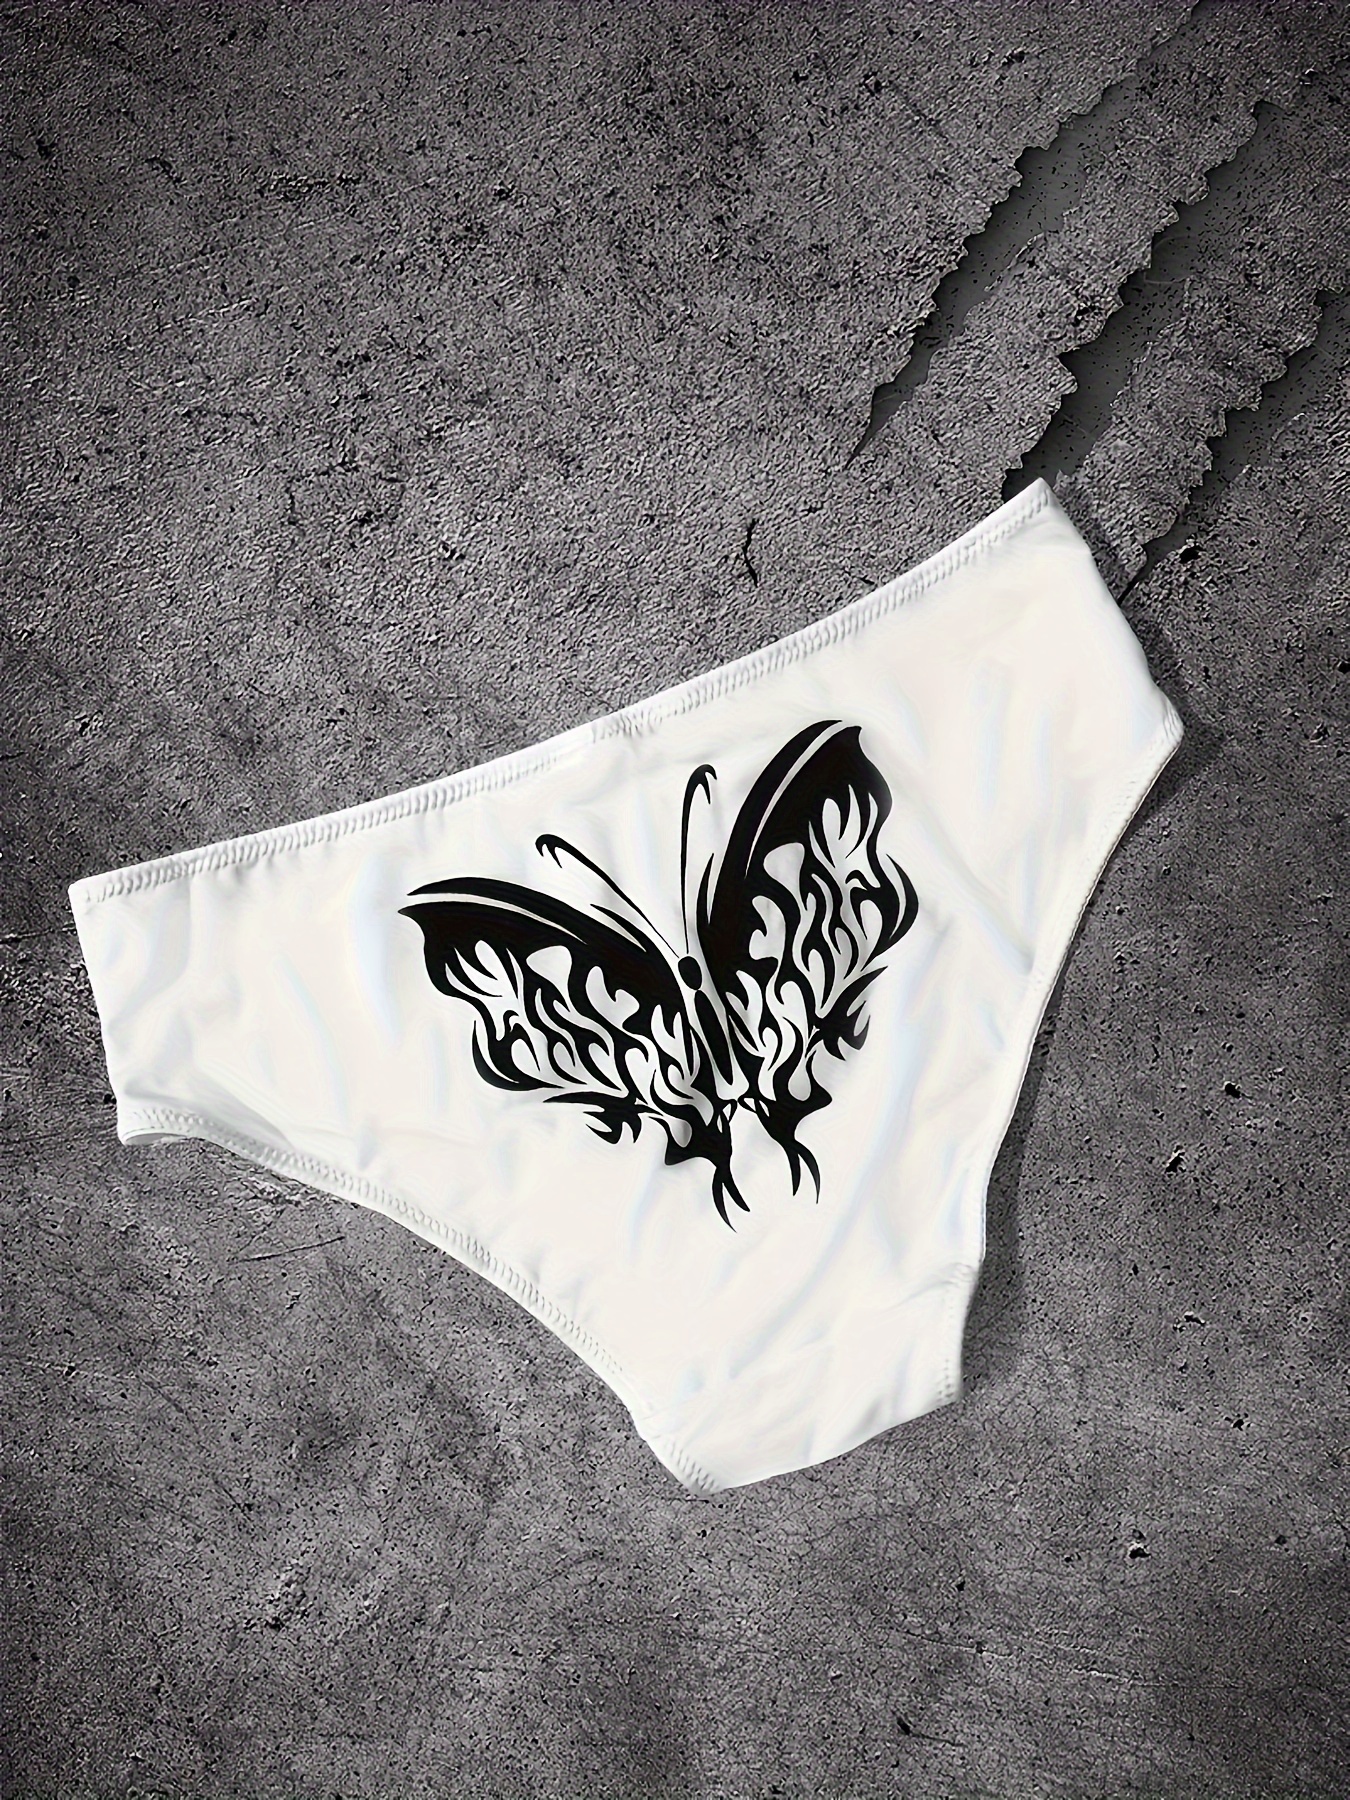 Torrid Cheeky Panties Underwear Spider Web Henley Halloween Black White 3  22 24